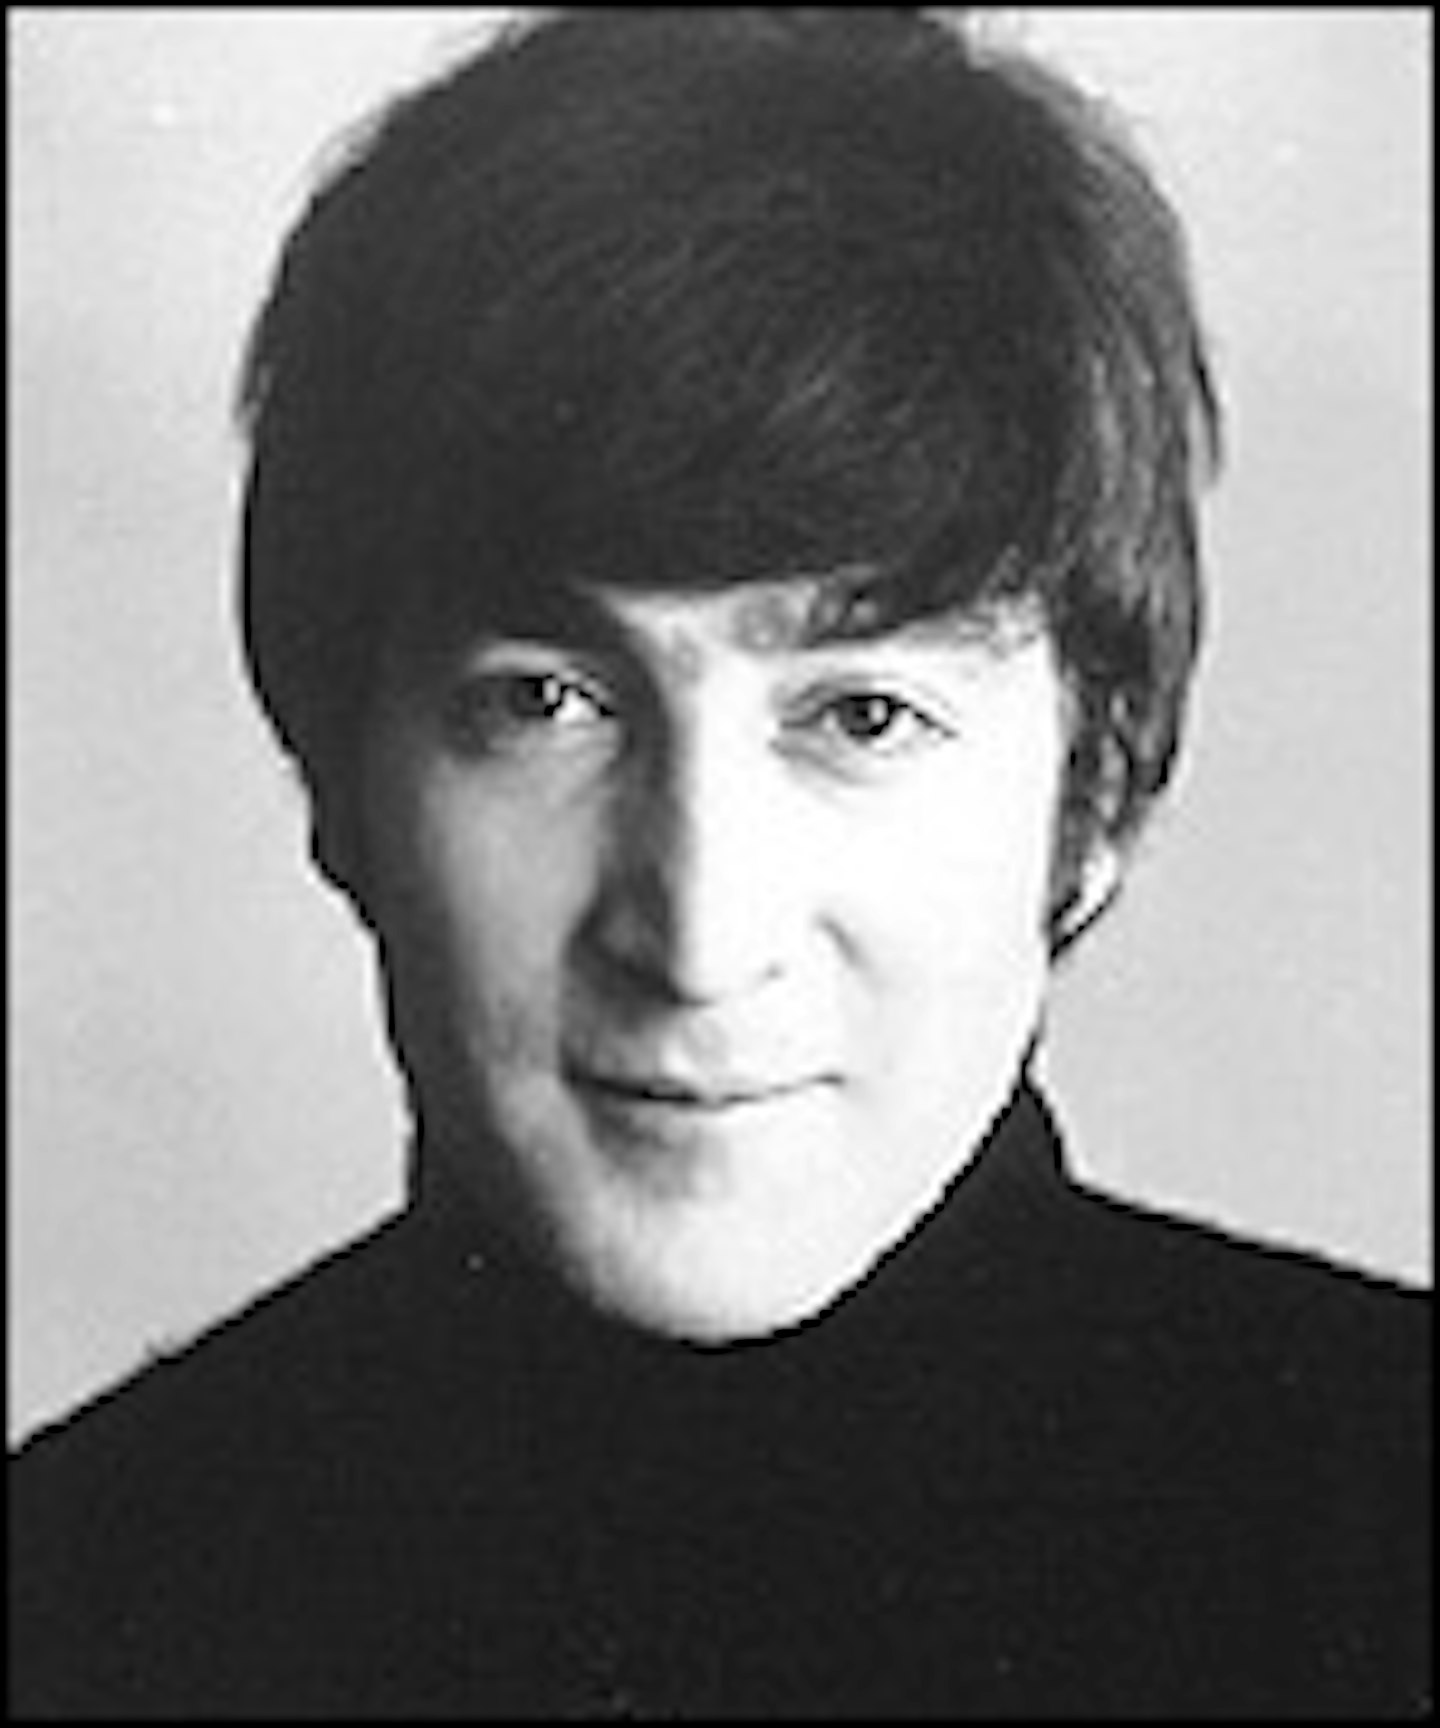 Imagine A Movie About John Lennon